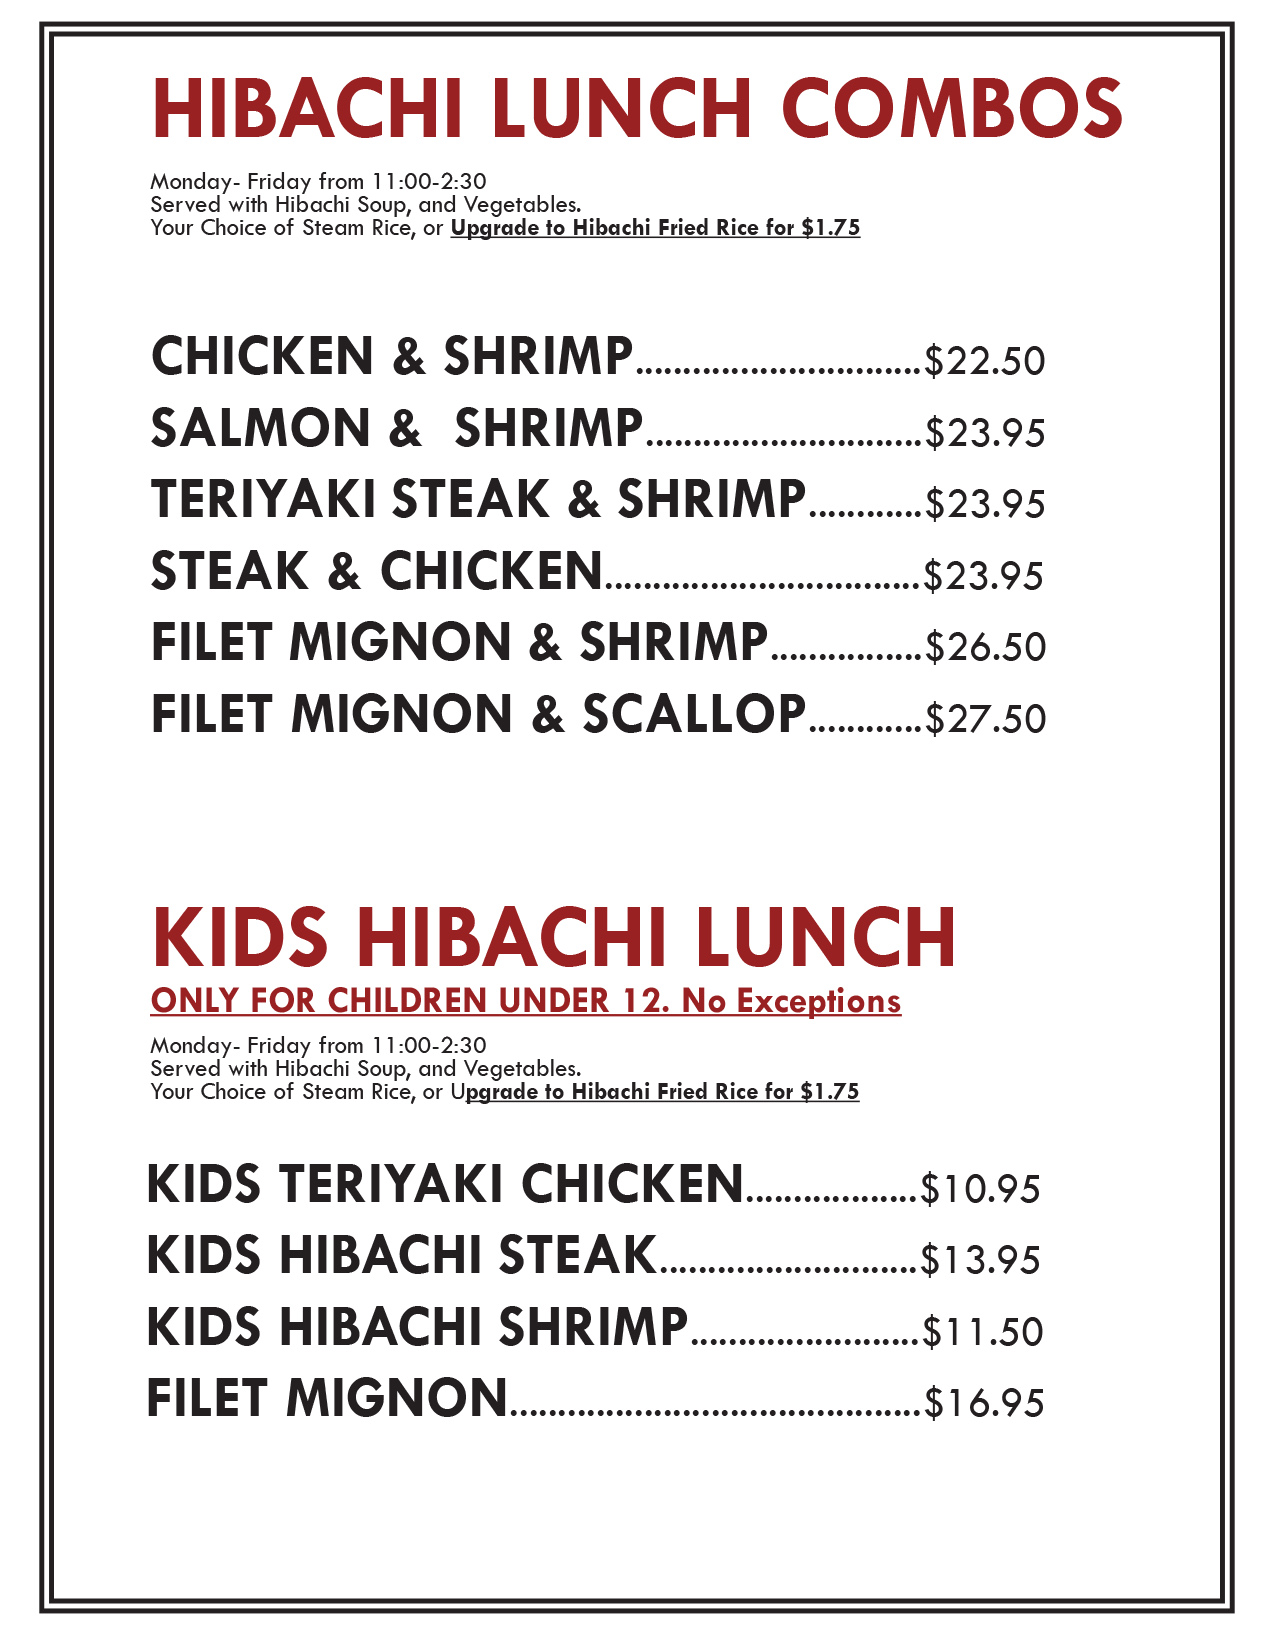 Lunch Hibachi